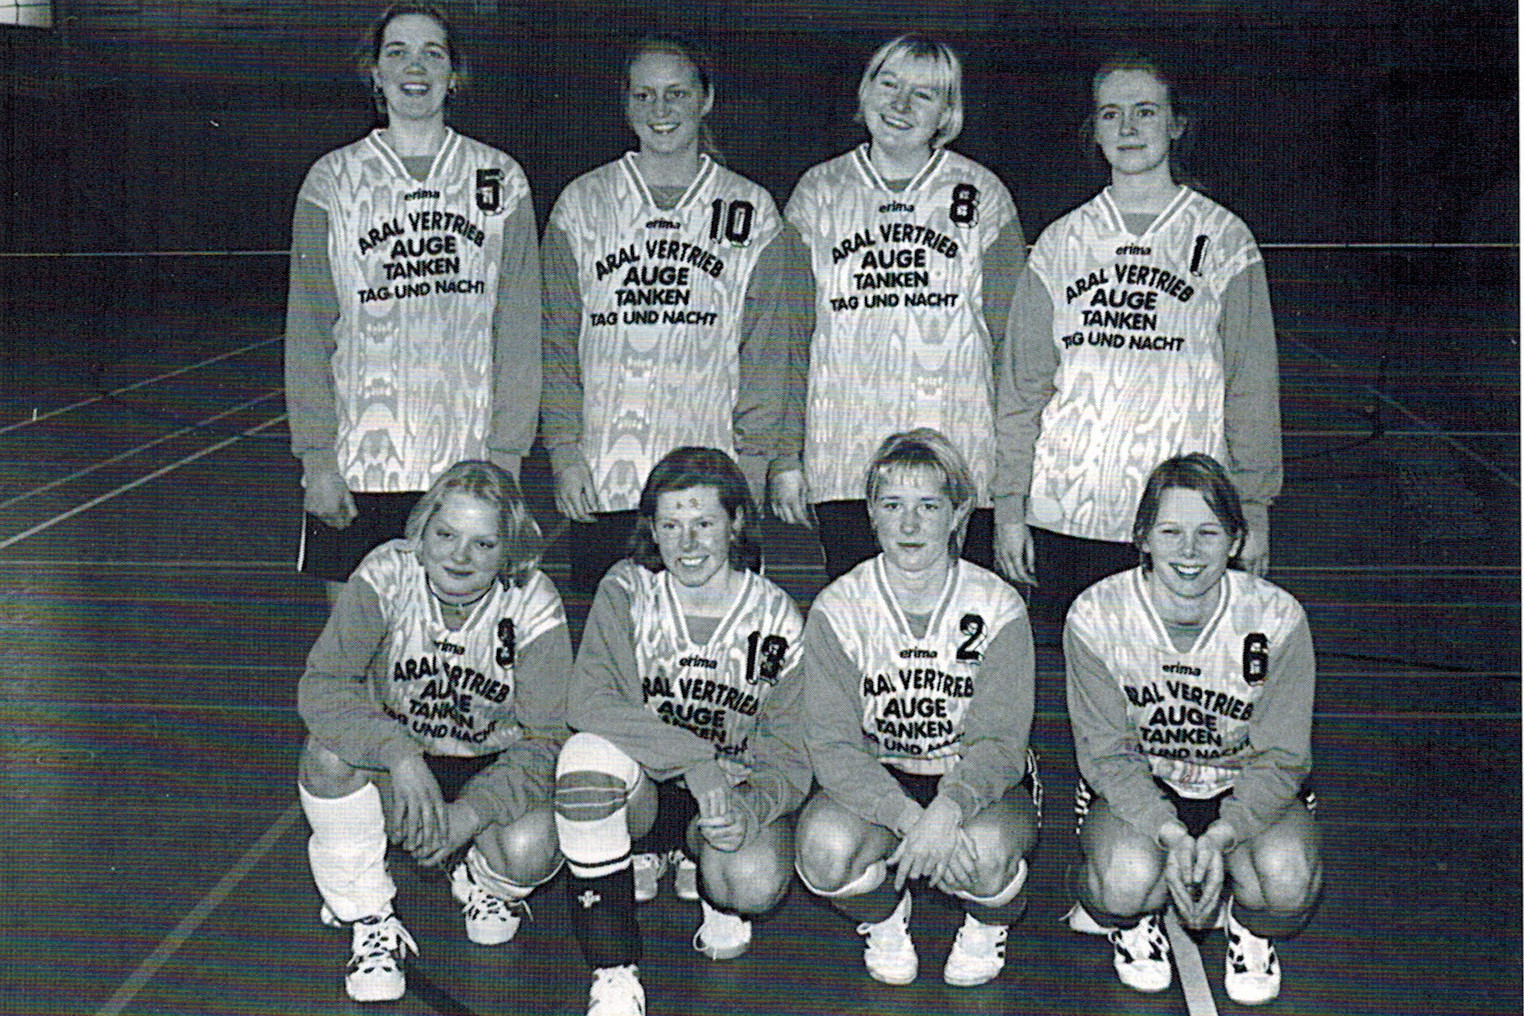 Volleyball 2. Damenmannschaft - oben v.l.: Ruth Hinken, Simone Stünkel, Karin Lemmermöhle, Tanja Schmidt - vorne v.l.: Andrea Santel, Ramona Temmen, Corinna Bäthker, Anke Schulte